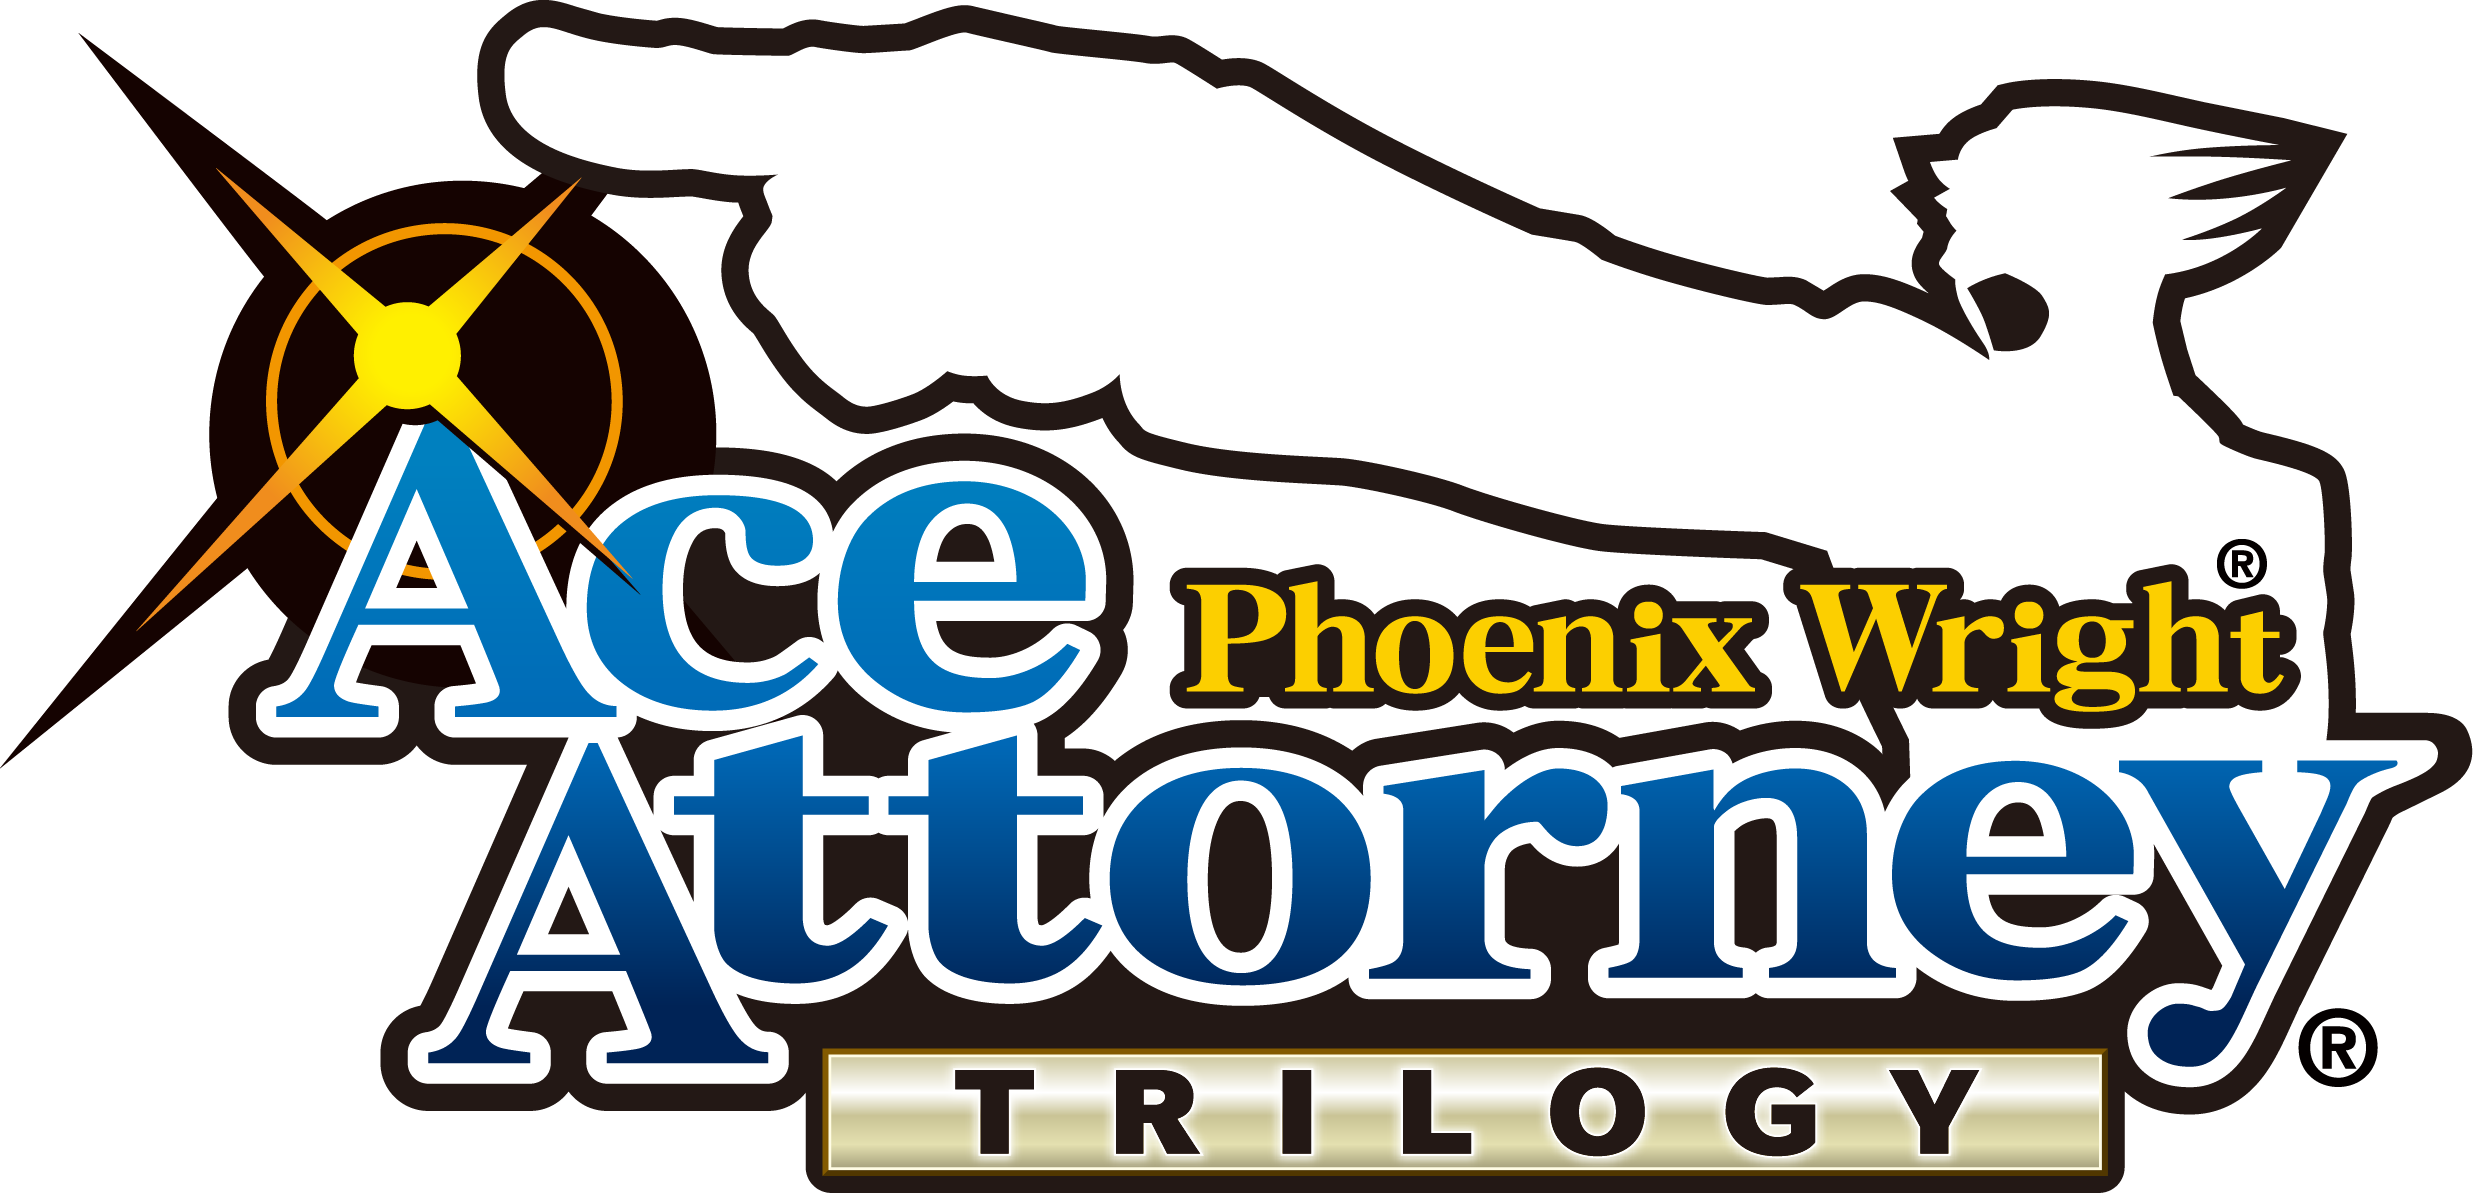 Phoenix Wright: Ace Attorney Trilogy HD, Ace Attorney Wiki